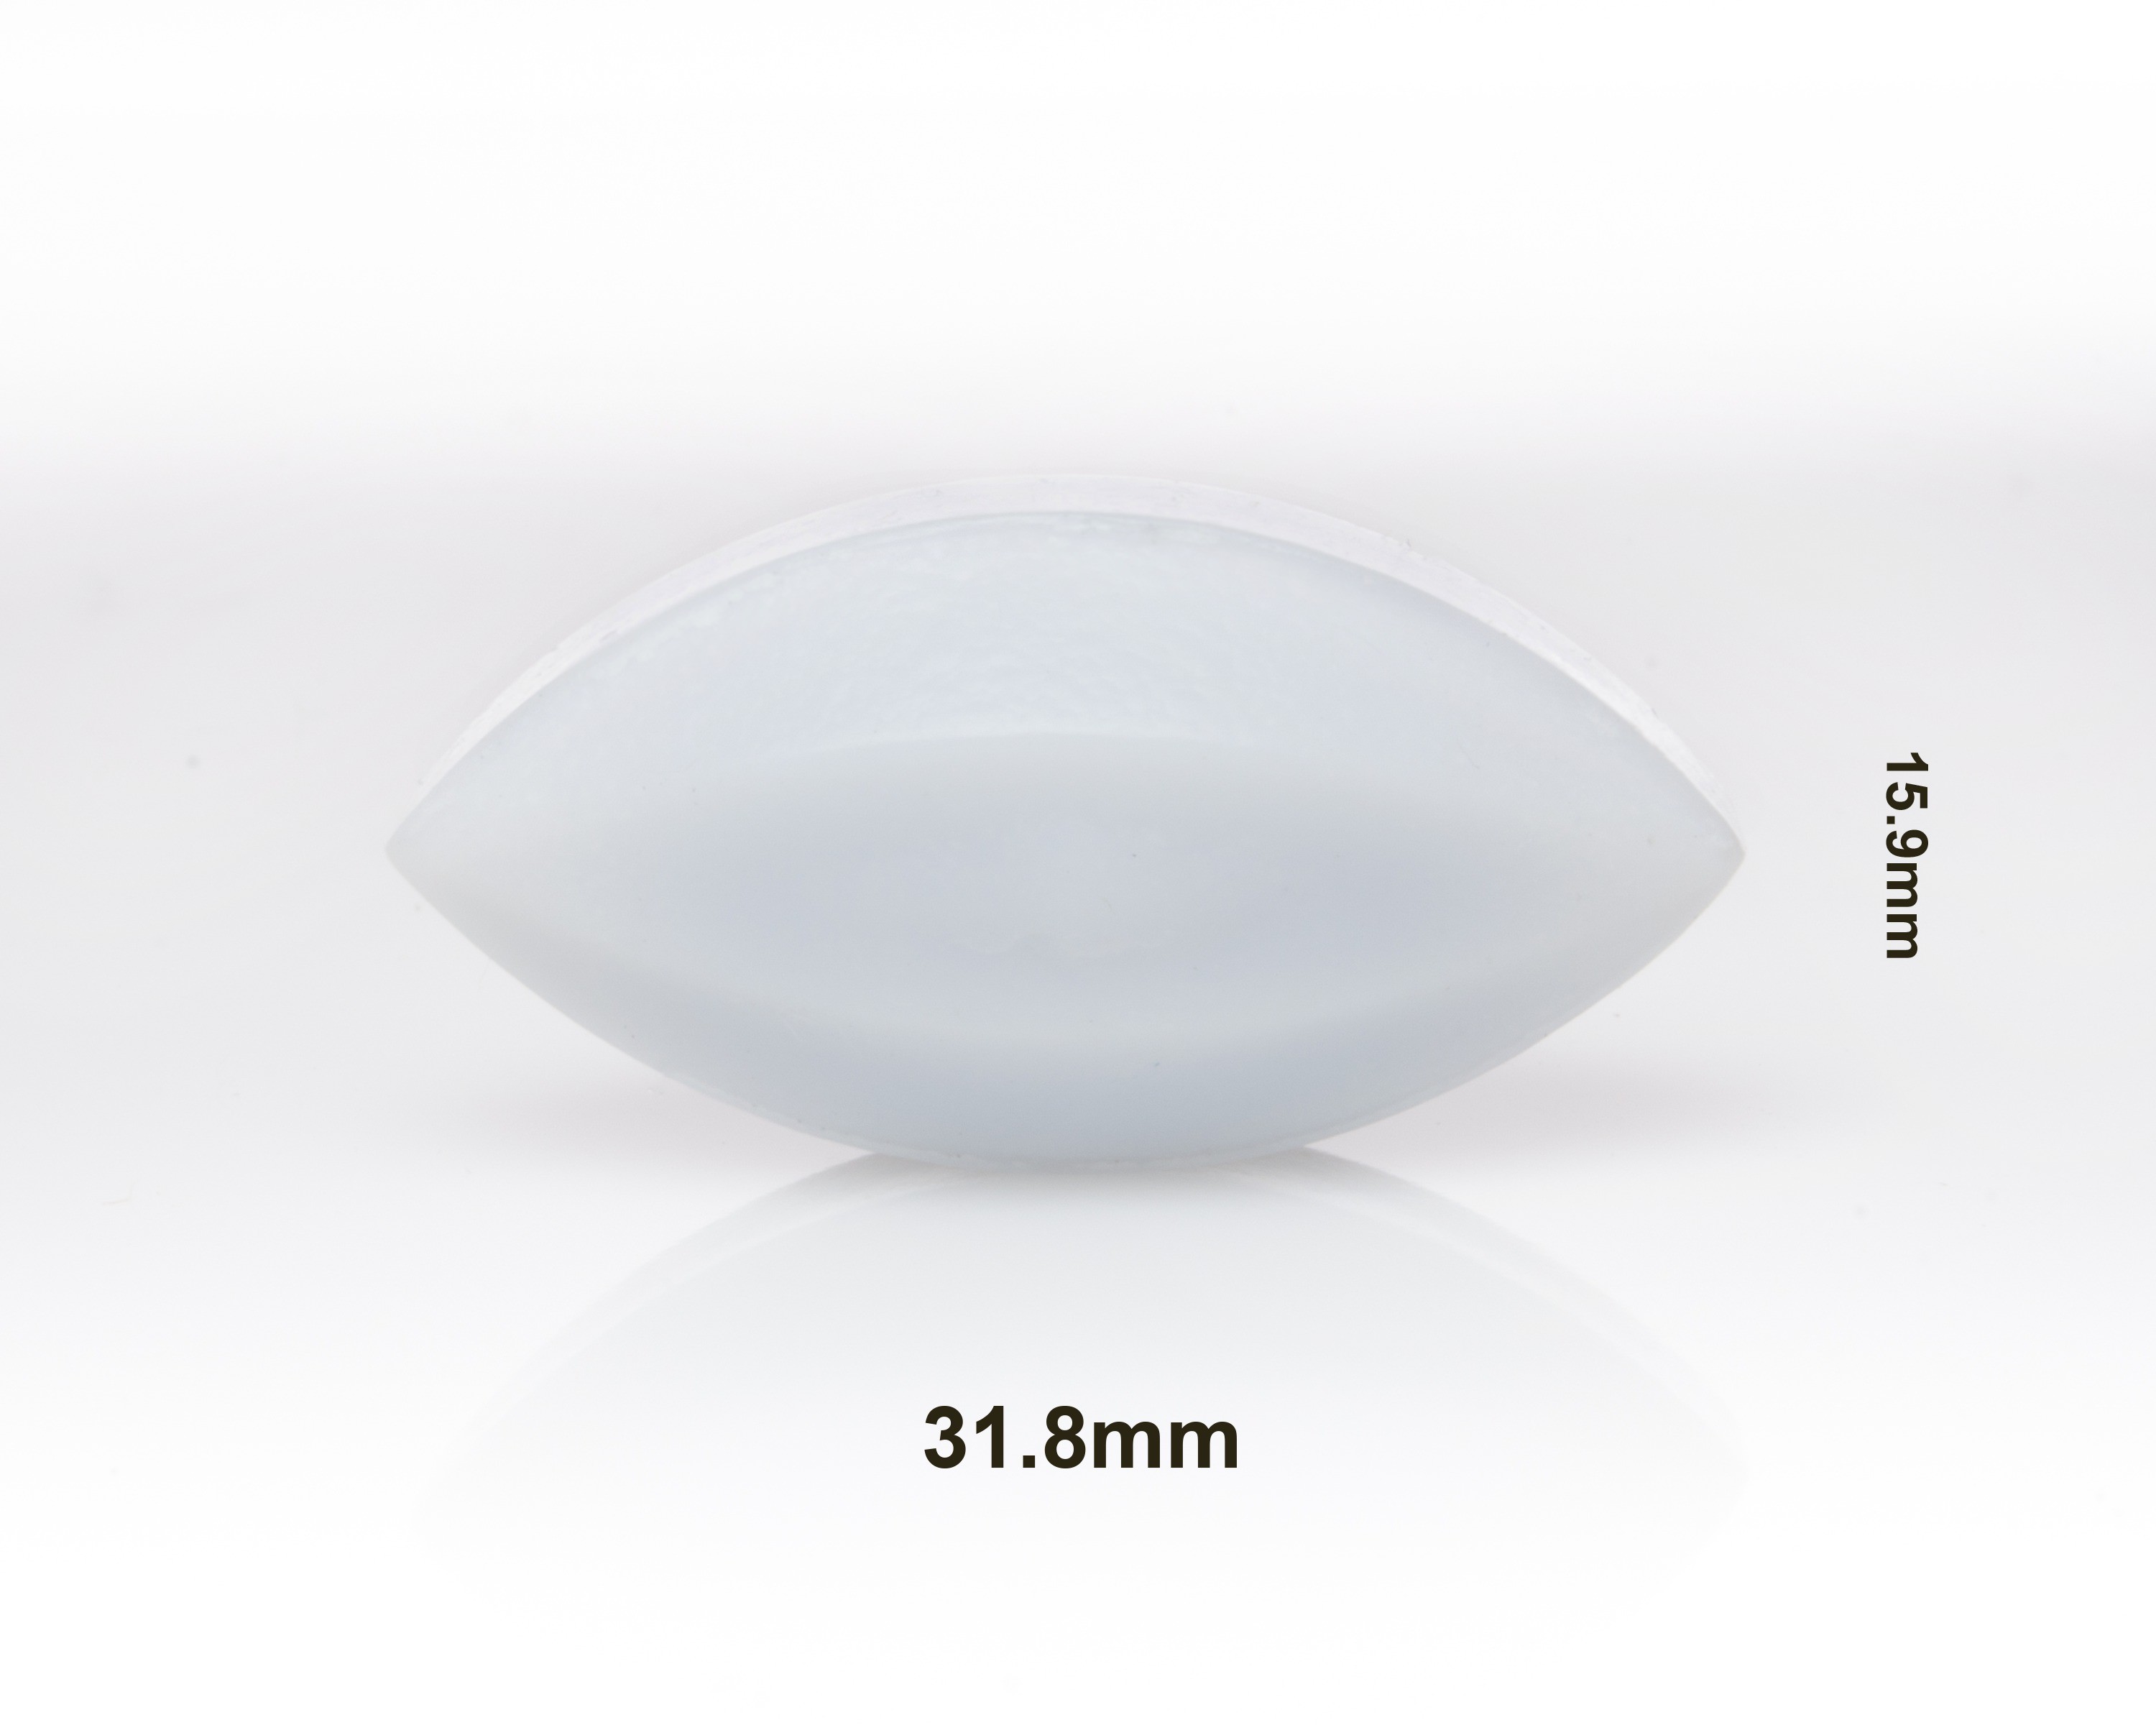 SP Bel-Art Spinbar Teflon Elliptical (Egg-Shaped) Magnetic Stirring Bar; 31.8 x 15.9mm, White